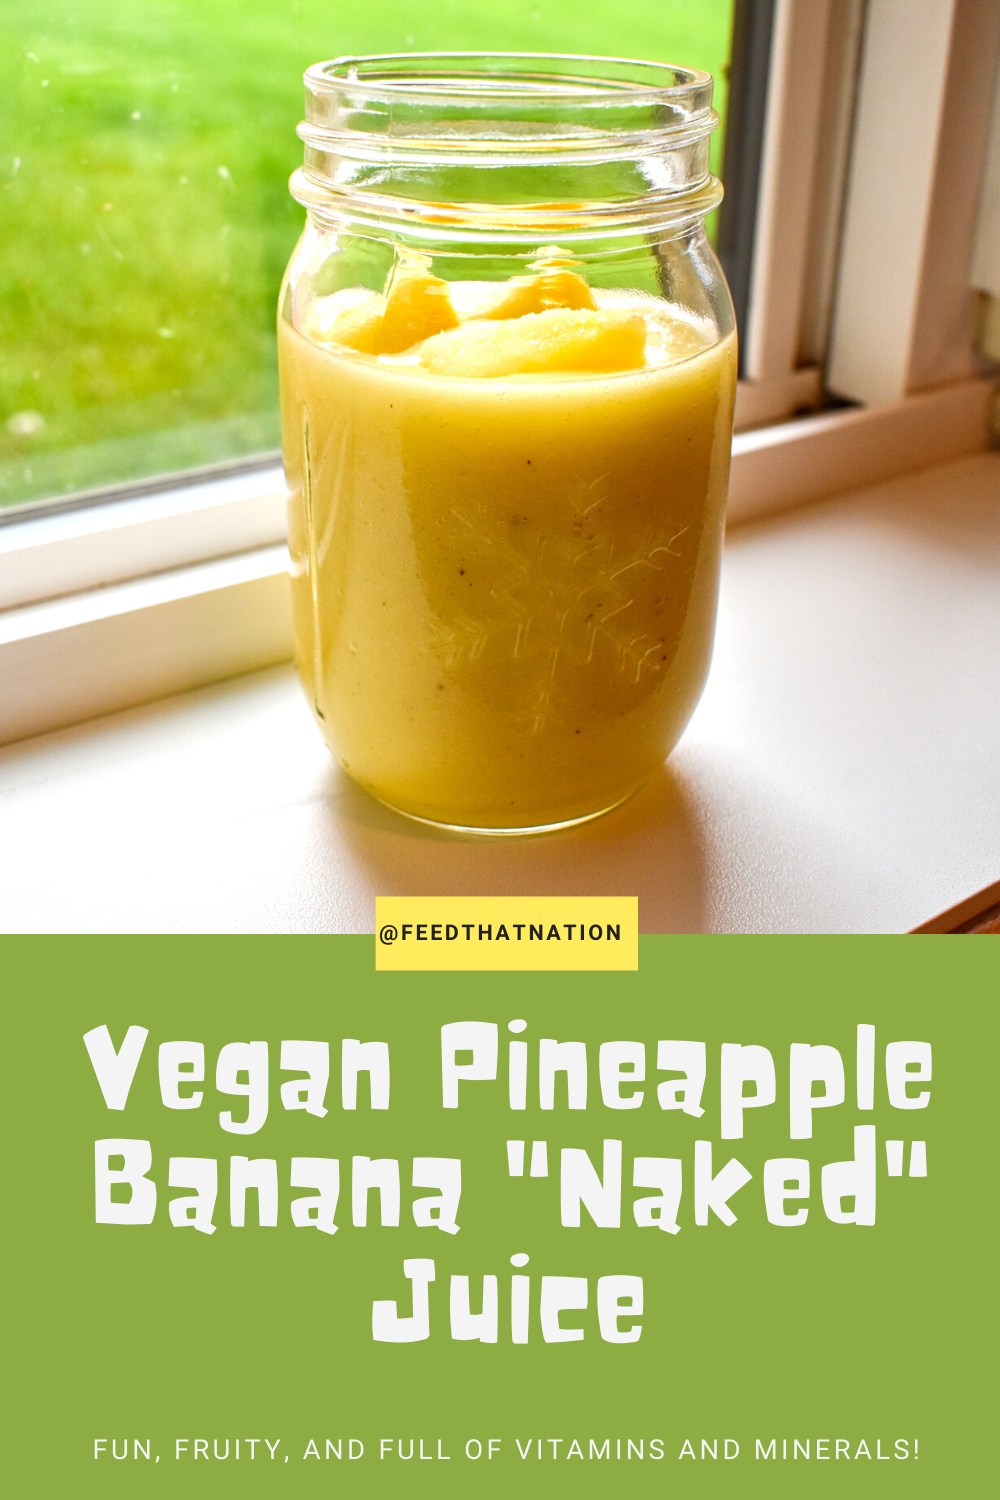 Vegan Pineapple Banana Naked Juice